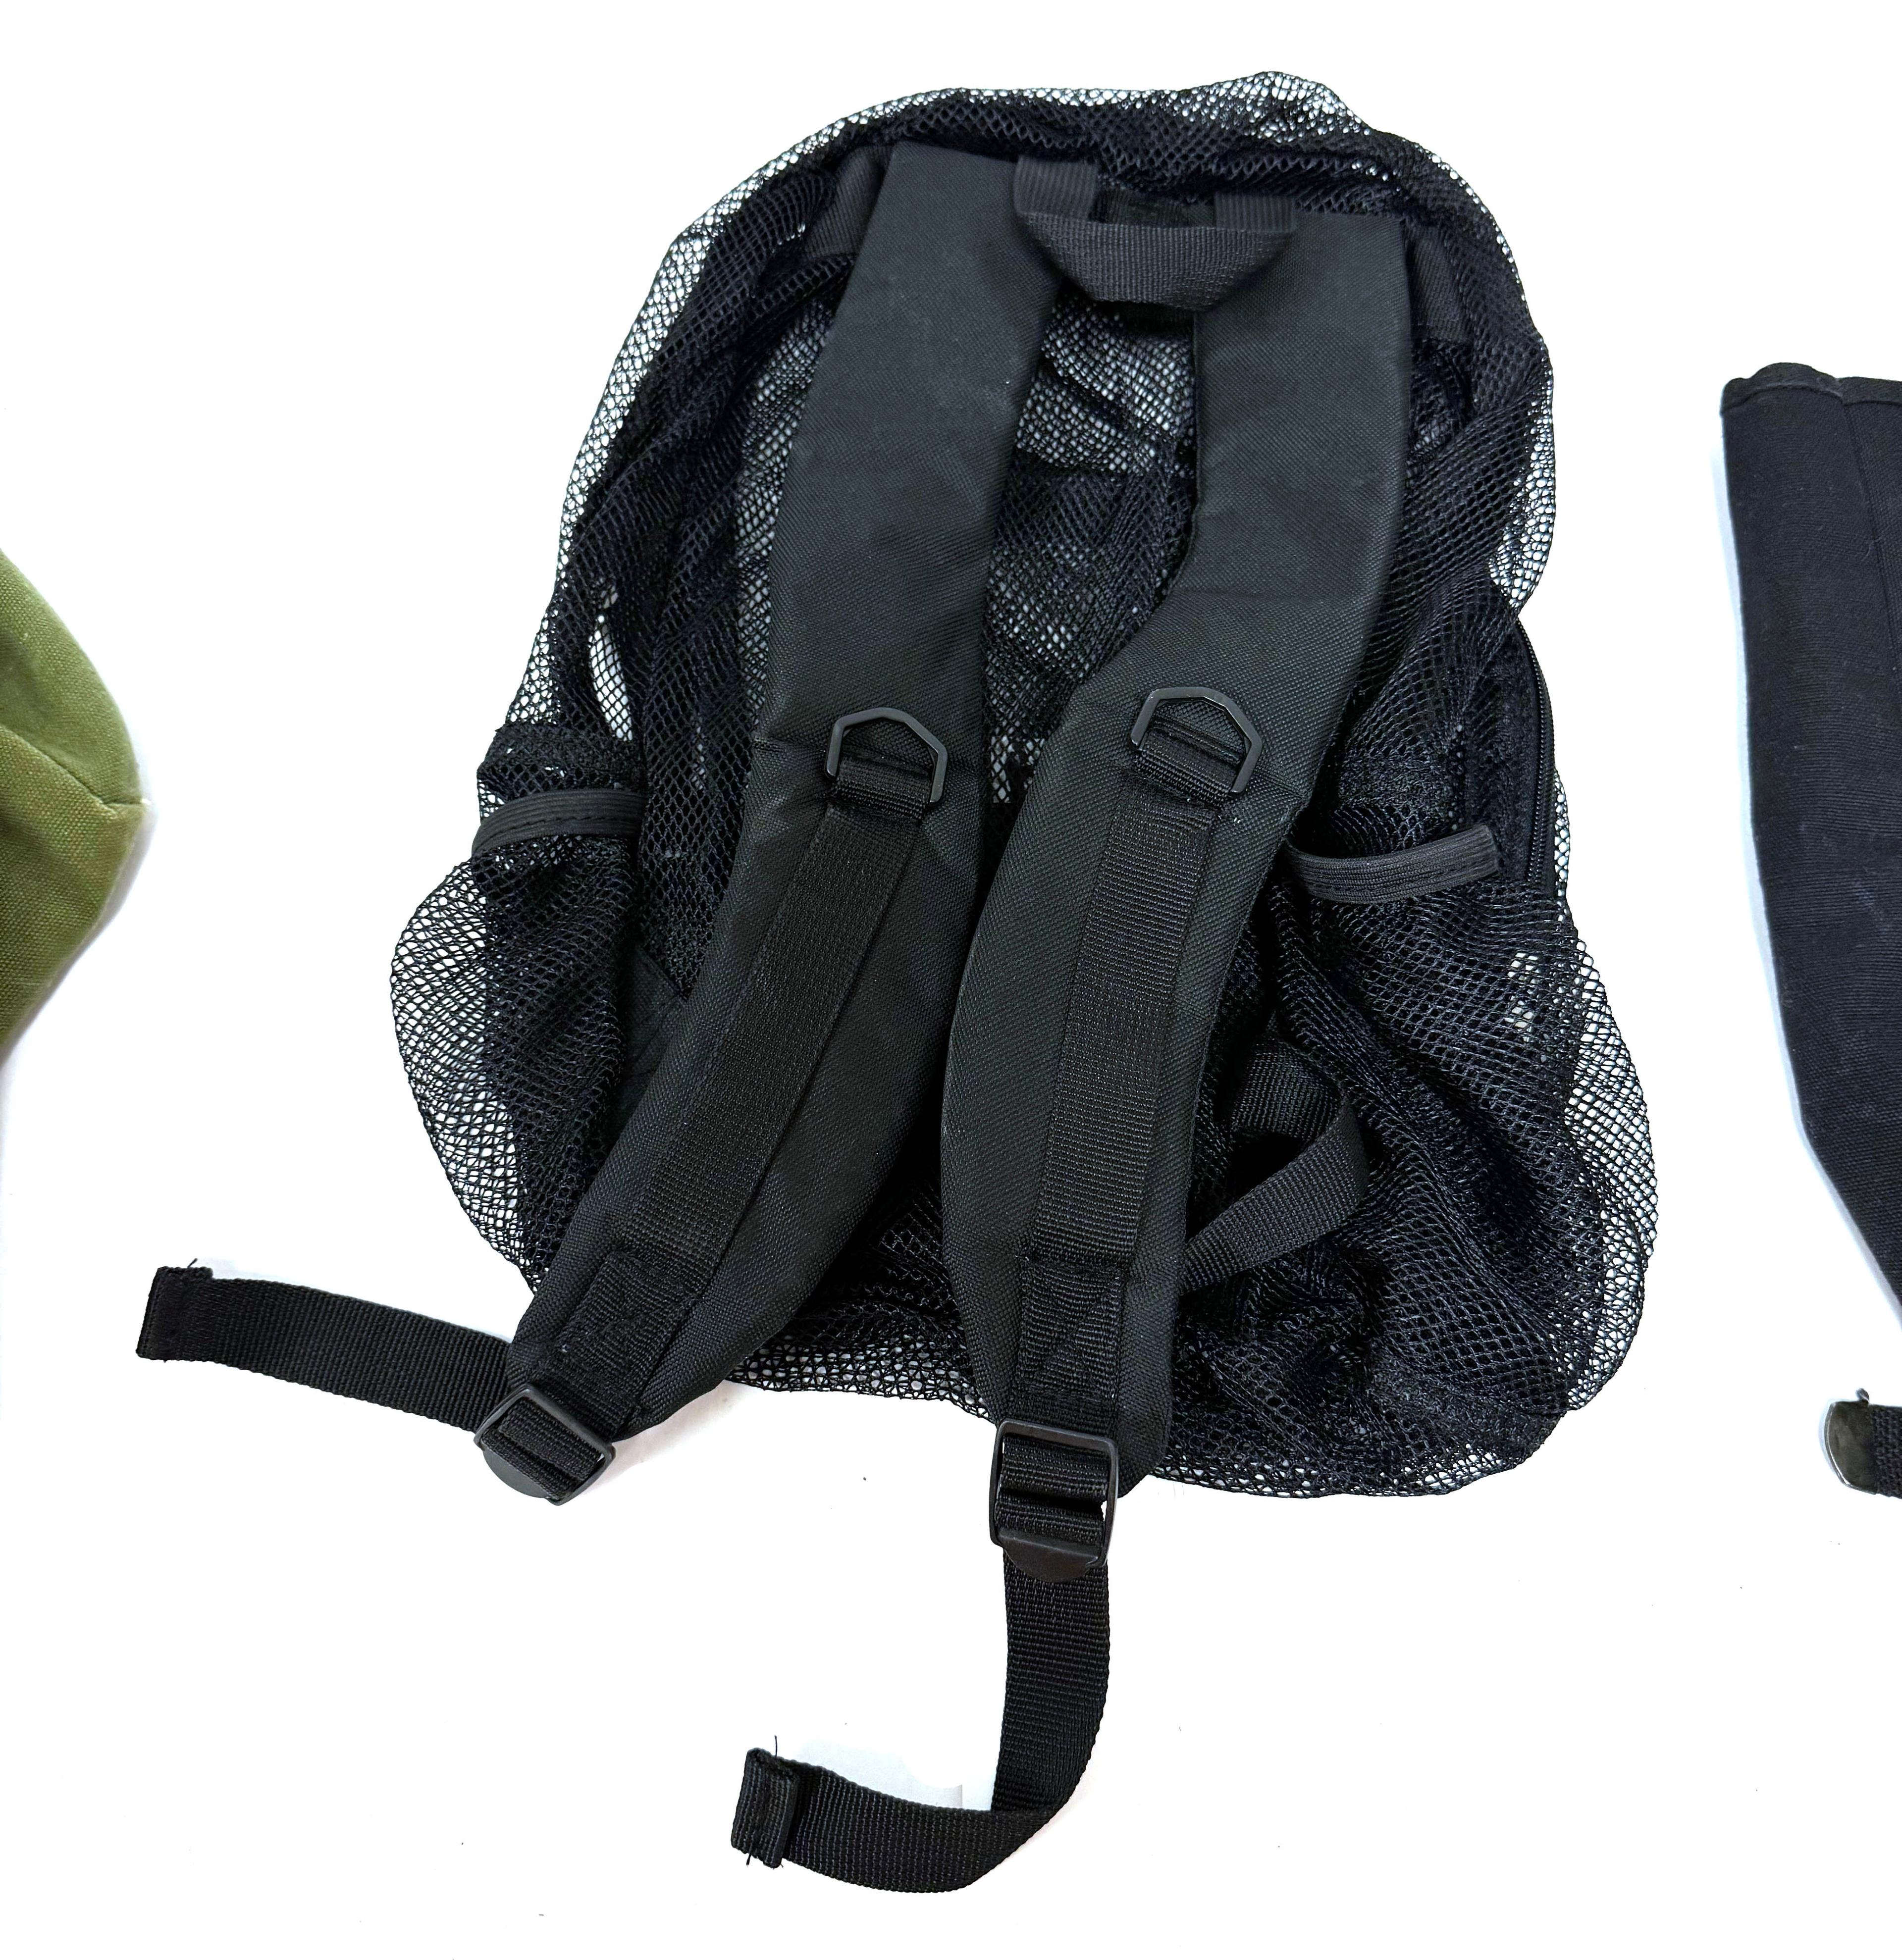 Gun Show Backpack, Carry Bag, and Green Duffel Bag